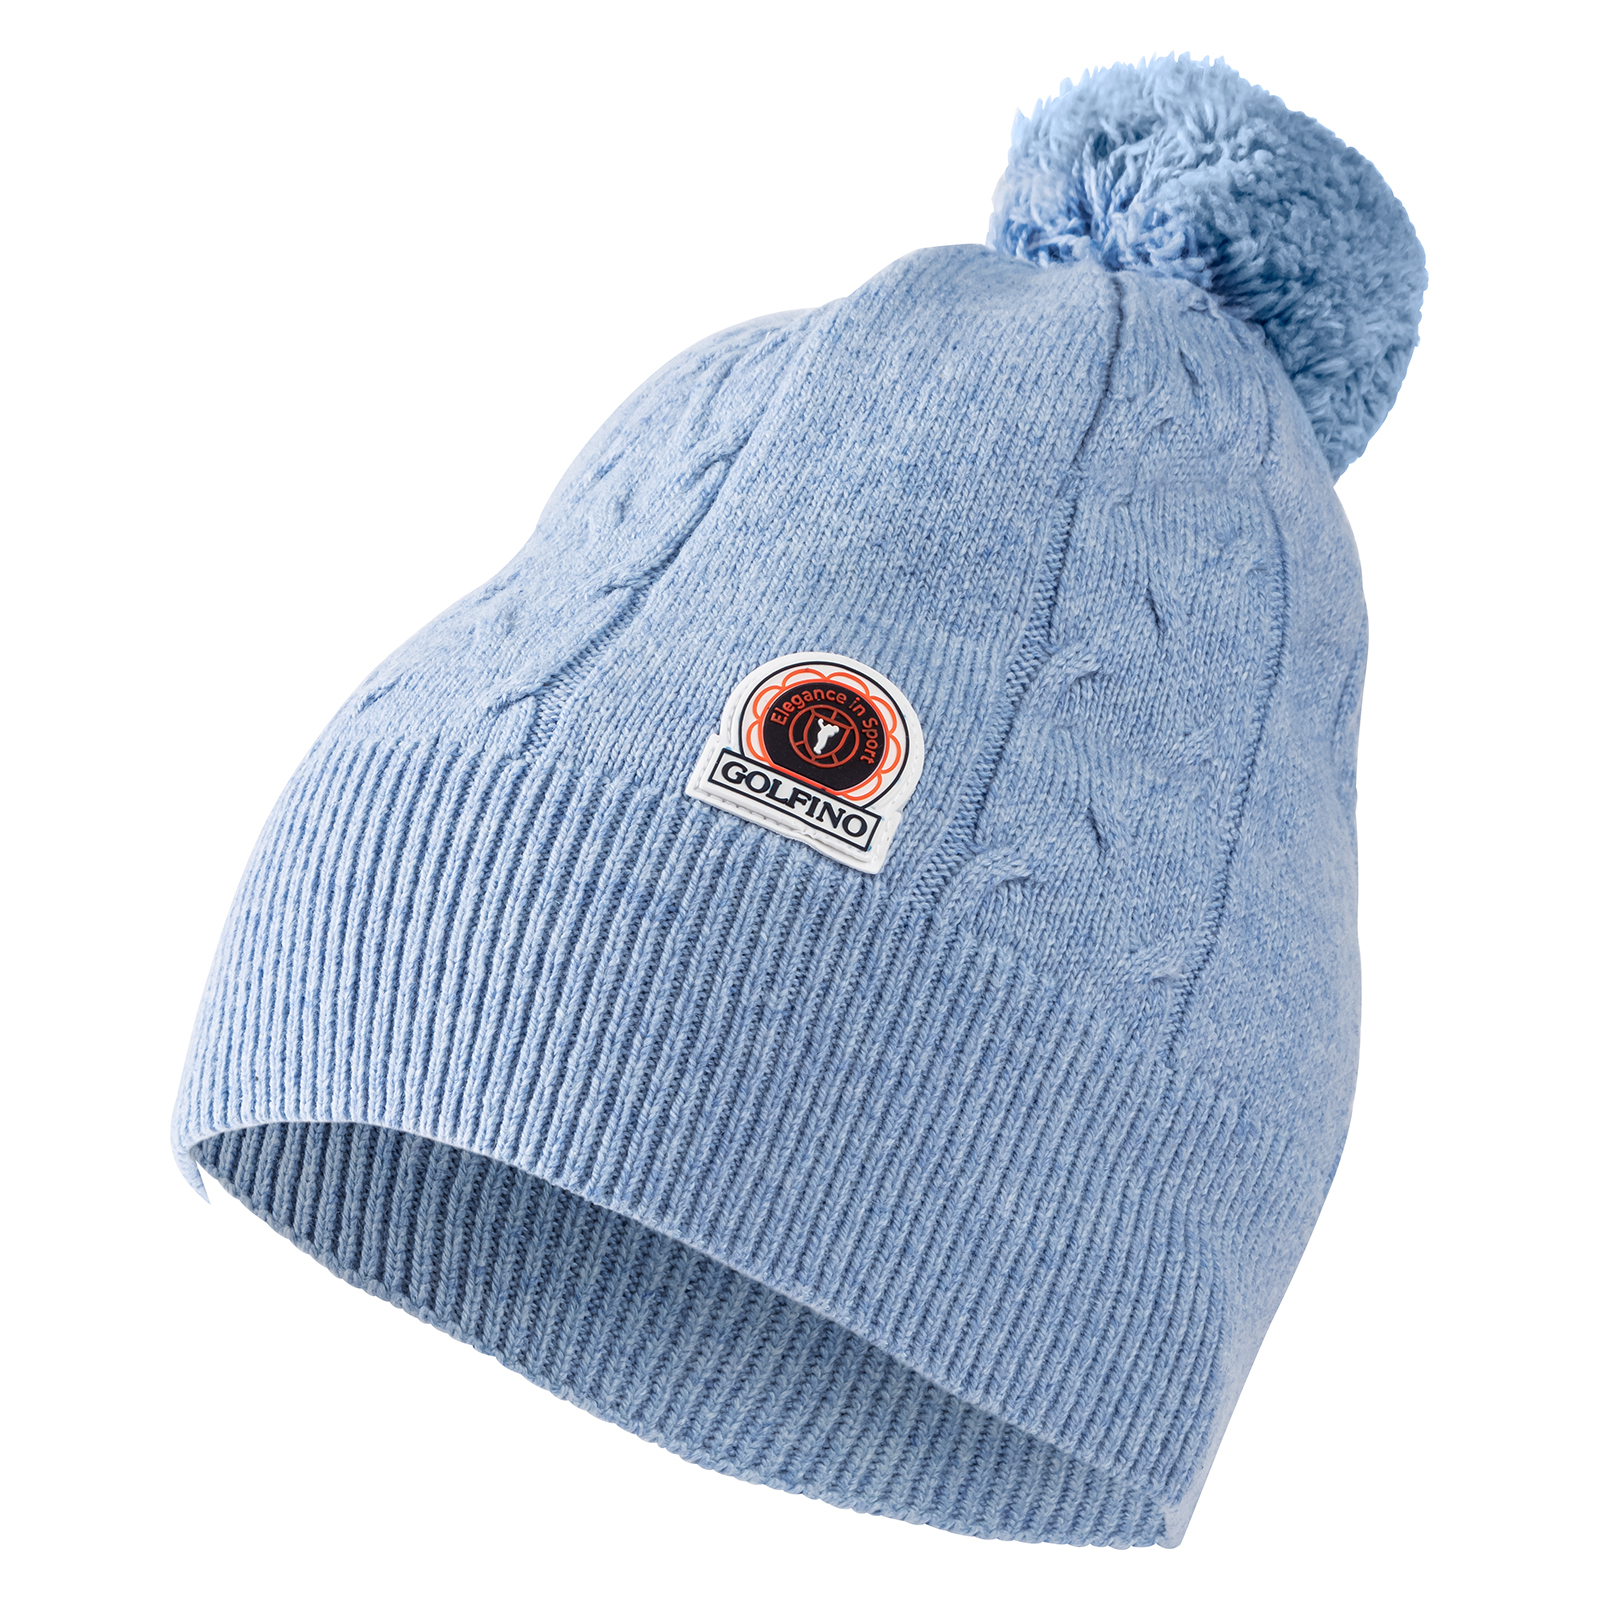 Ladies' pompom hat in merino wool and organic cotton